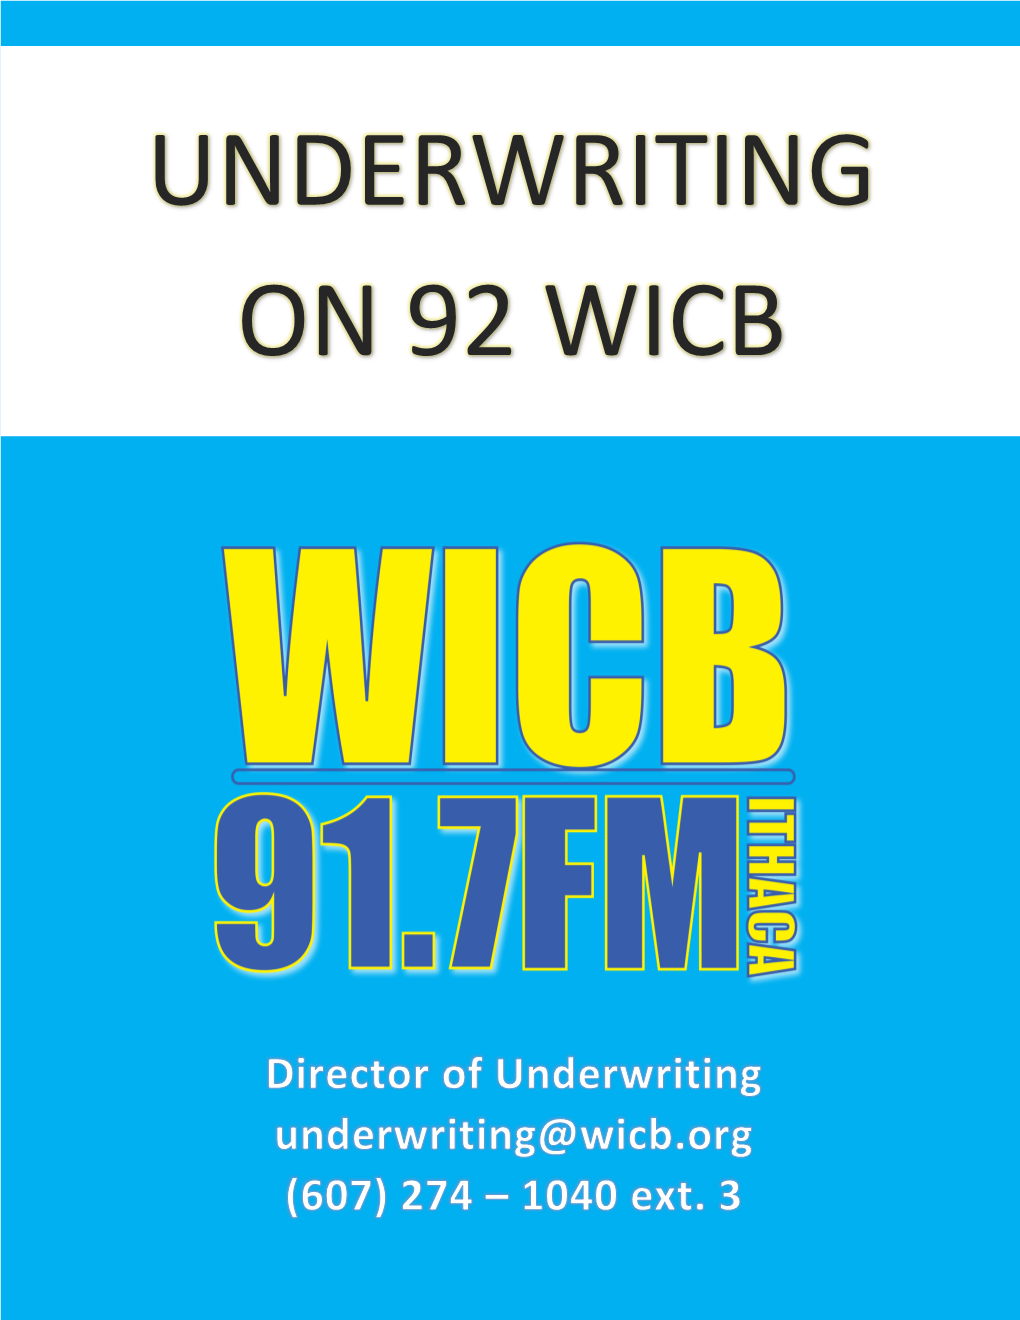 WICB Underwriting Write Up